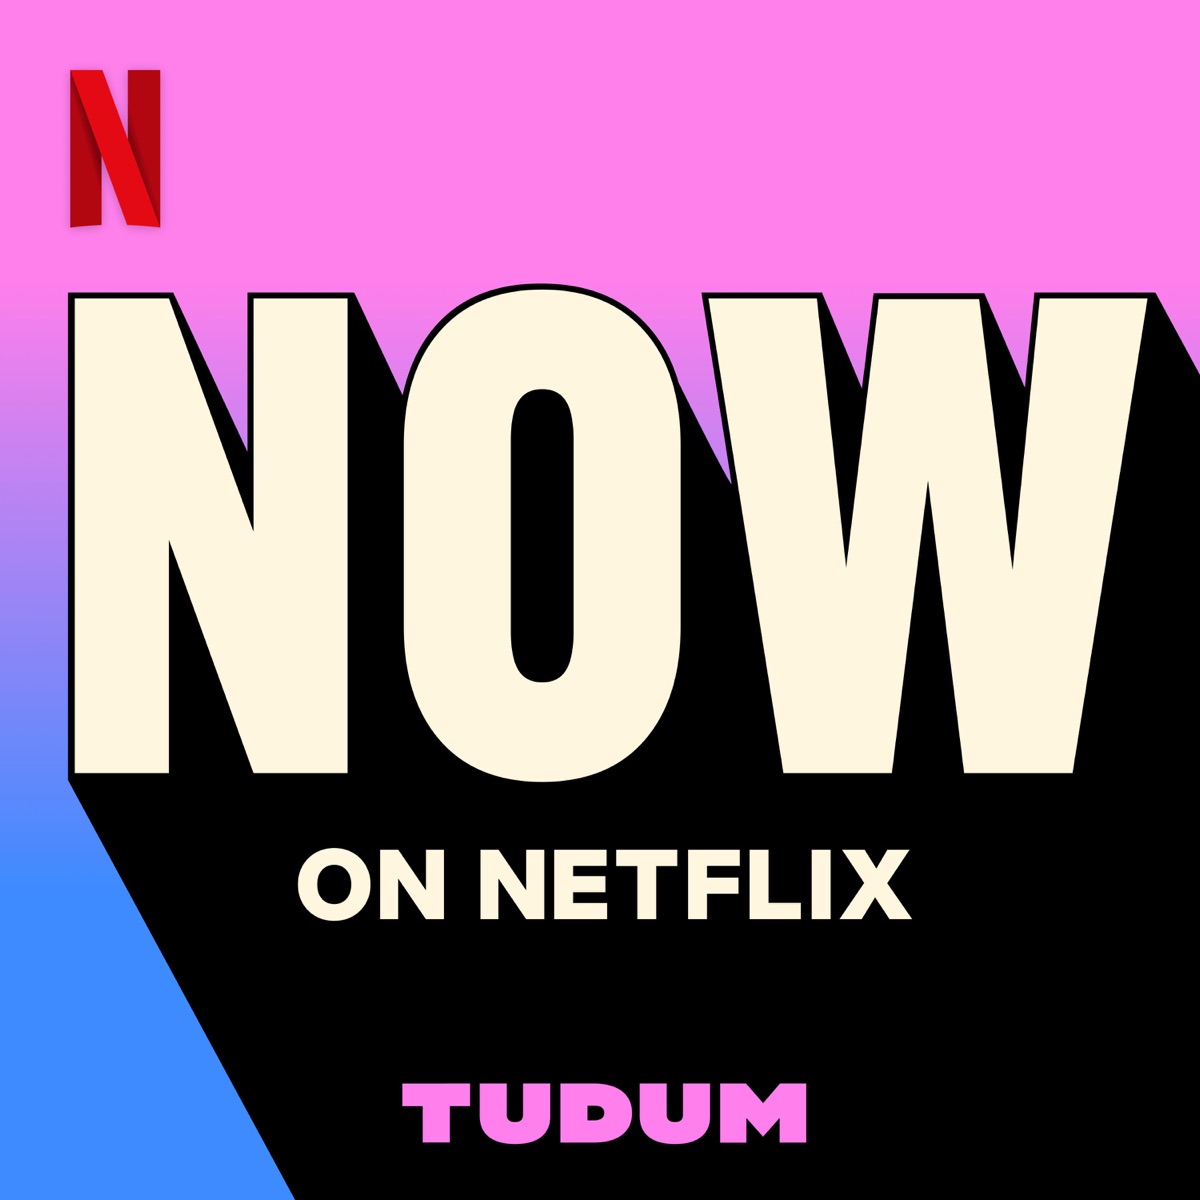 Listen to the ONE PIECE Live Action Soundtrack Here - Netflix Tudum